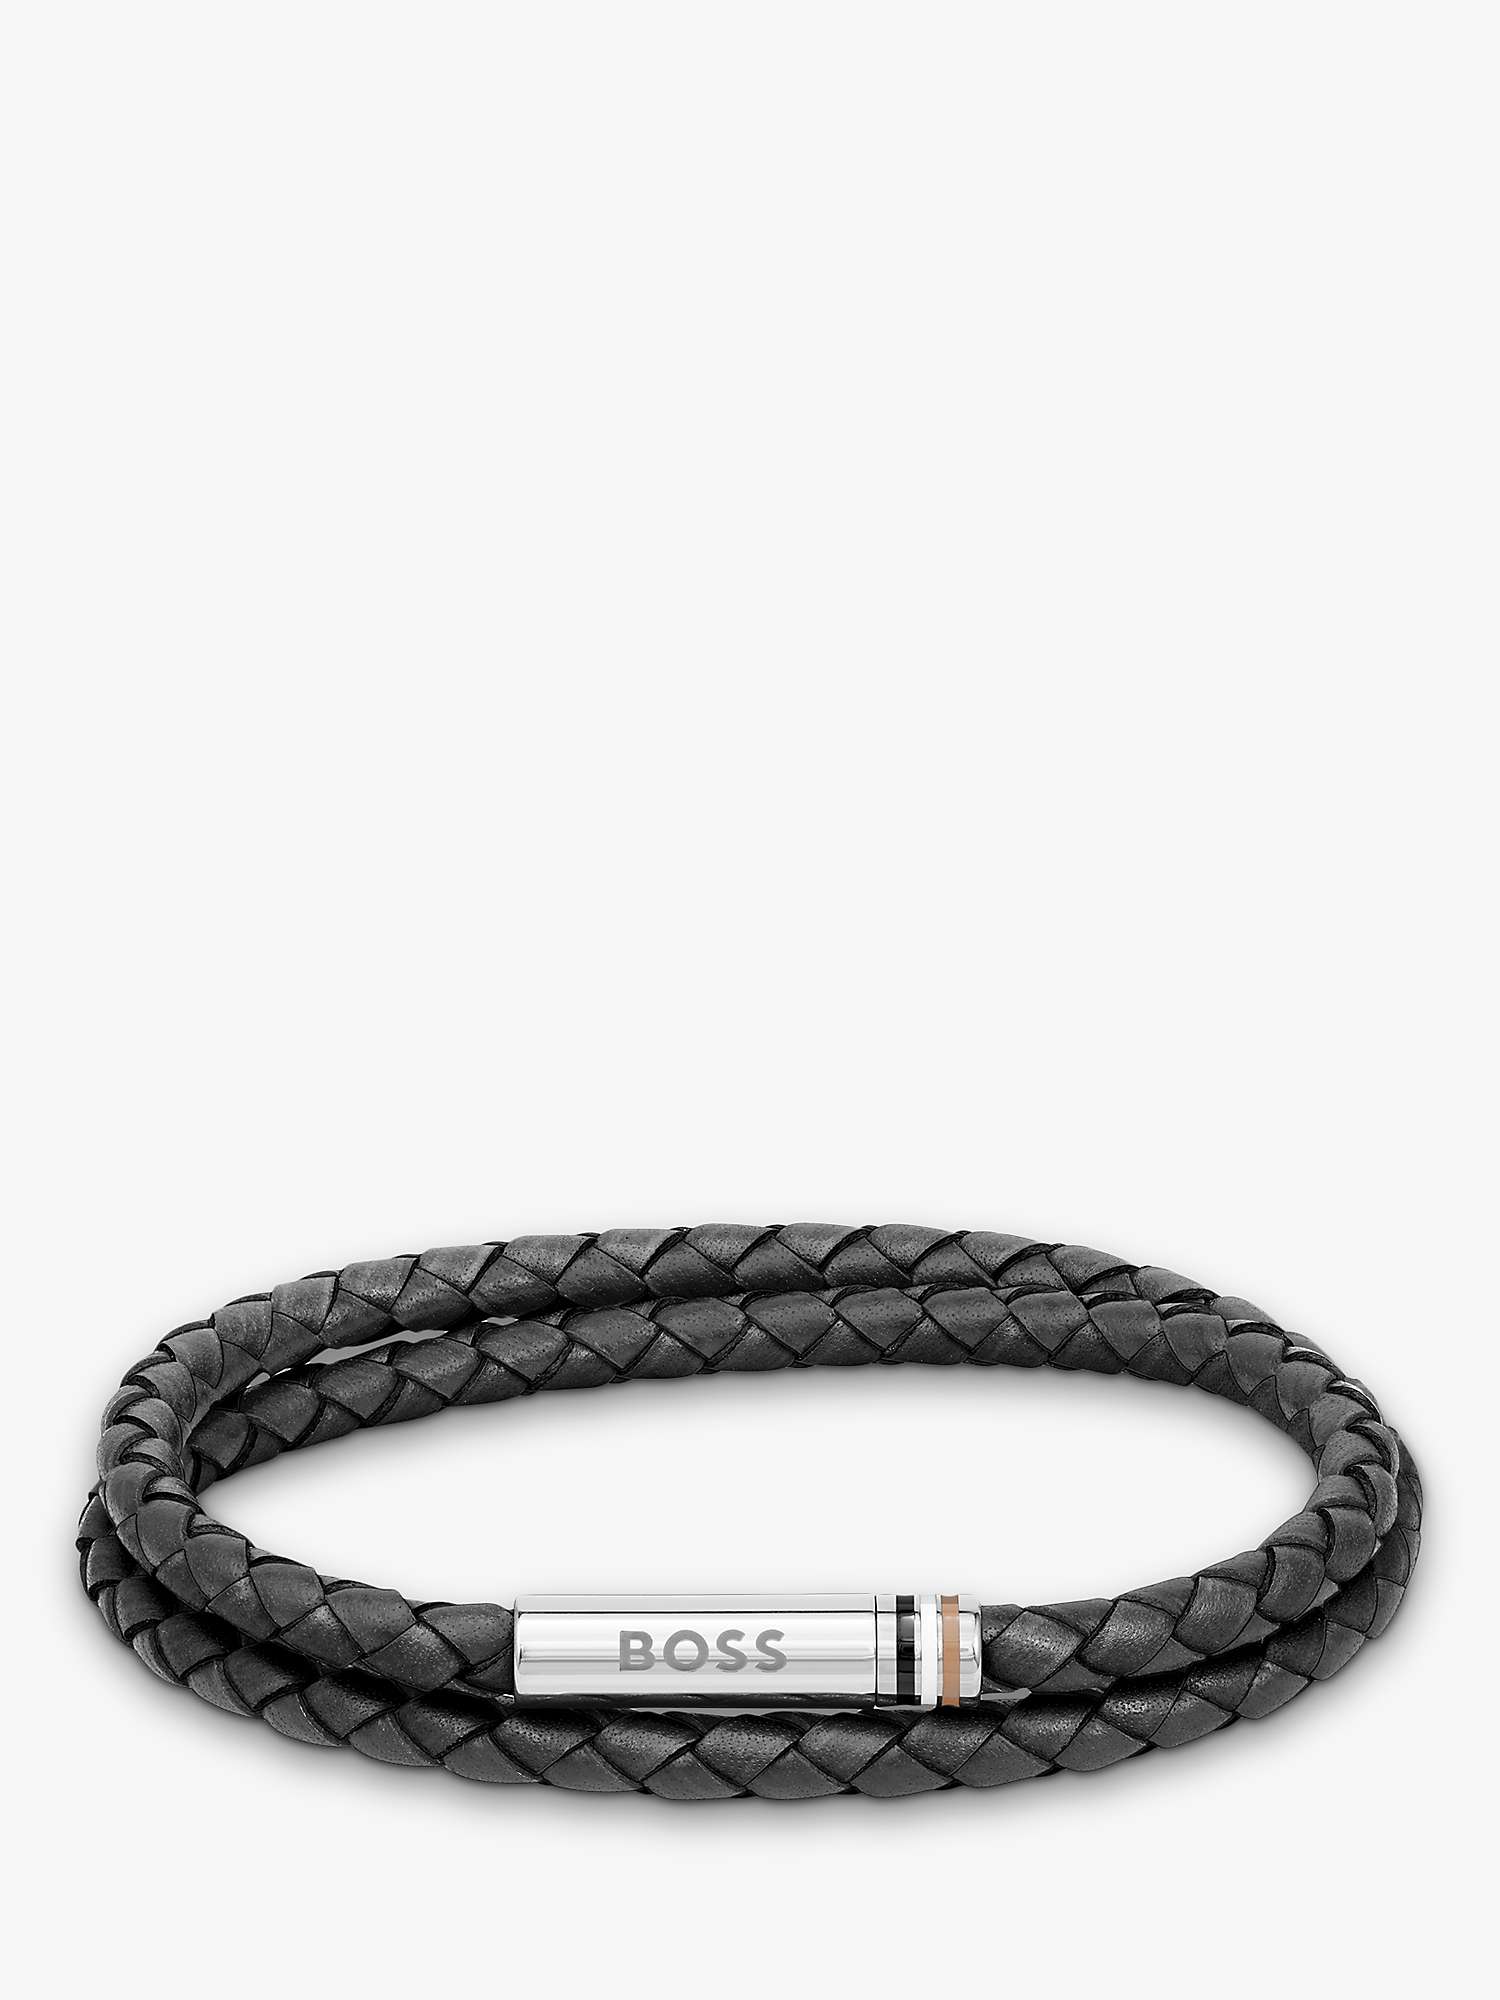 Buy BOSS Men's Leather Double Braided Bracelet Online at johnlewis.com